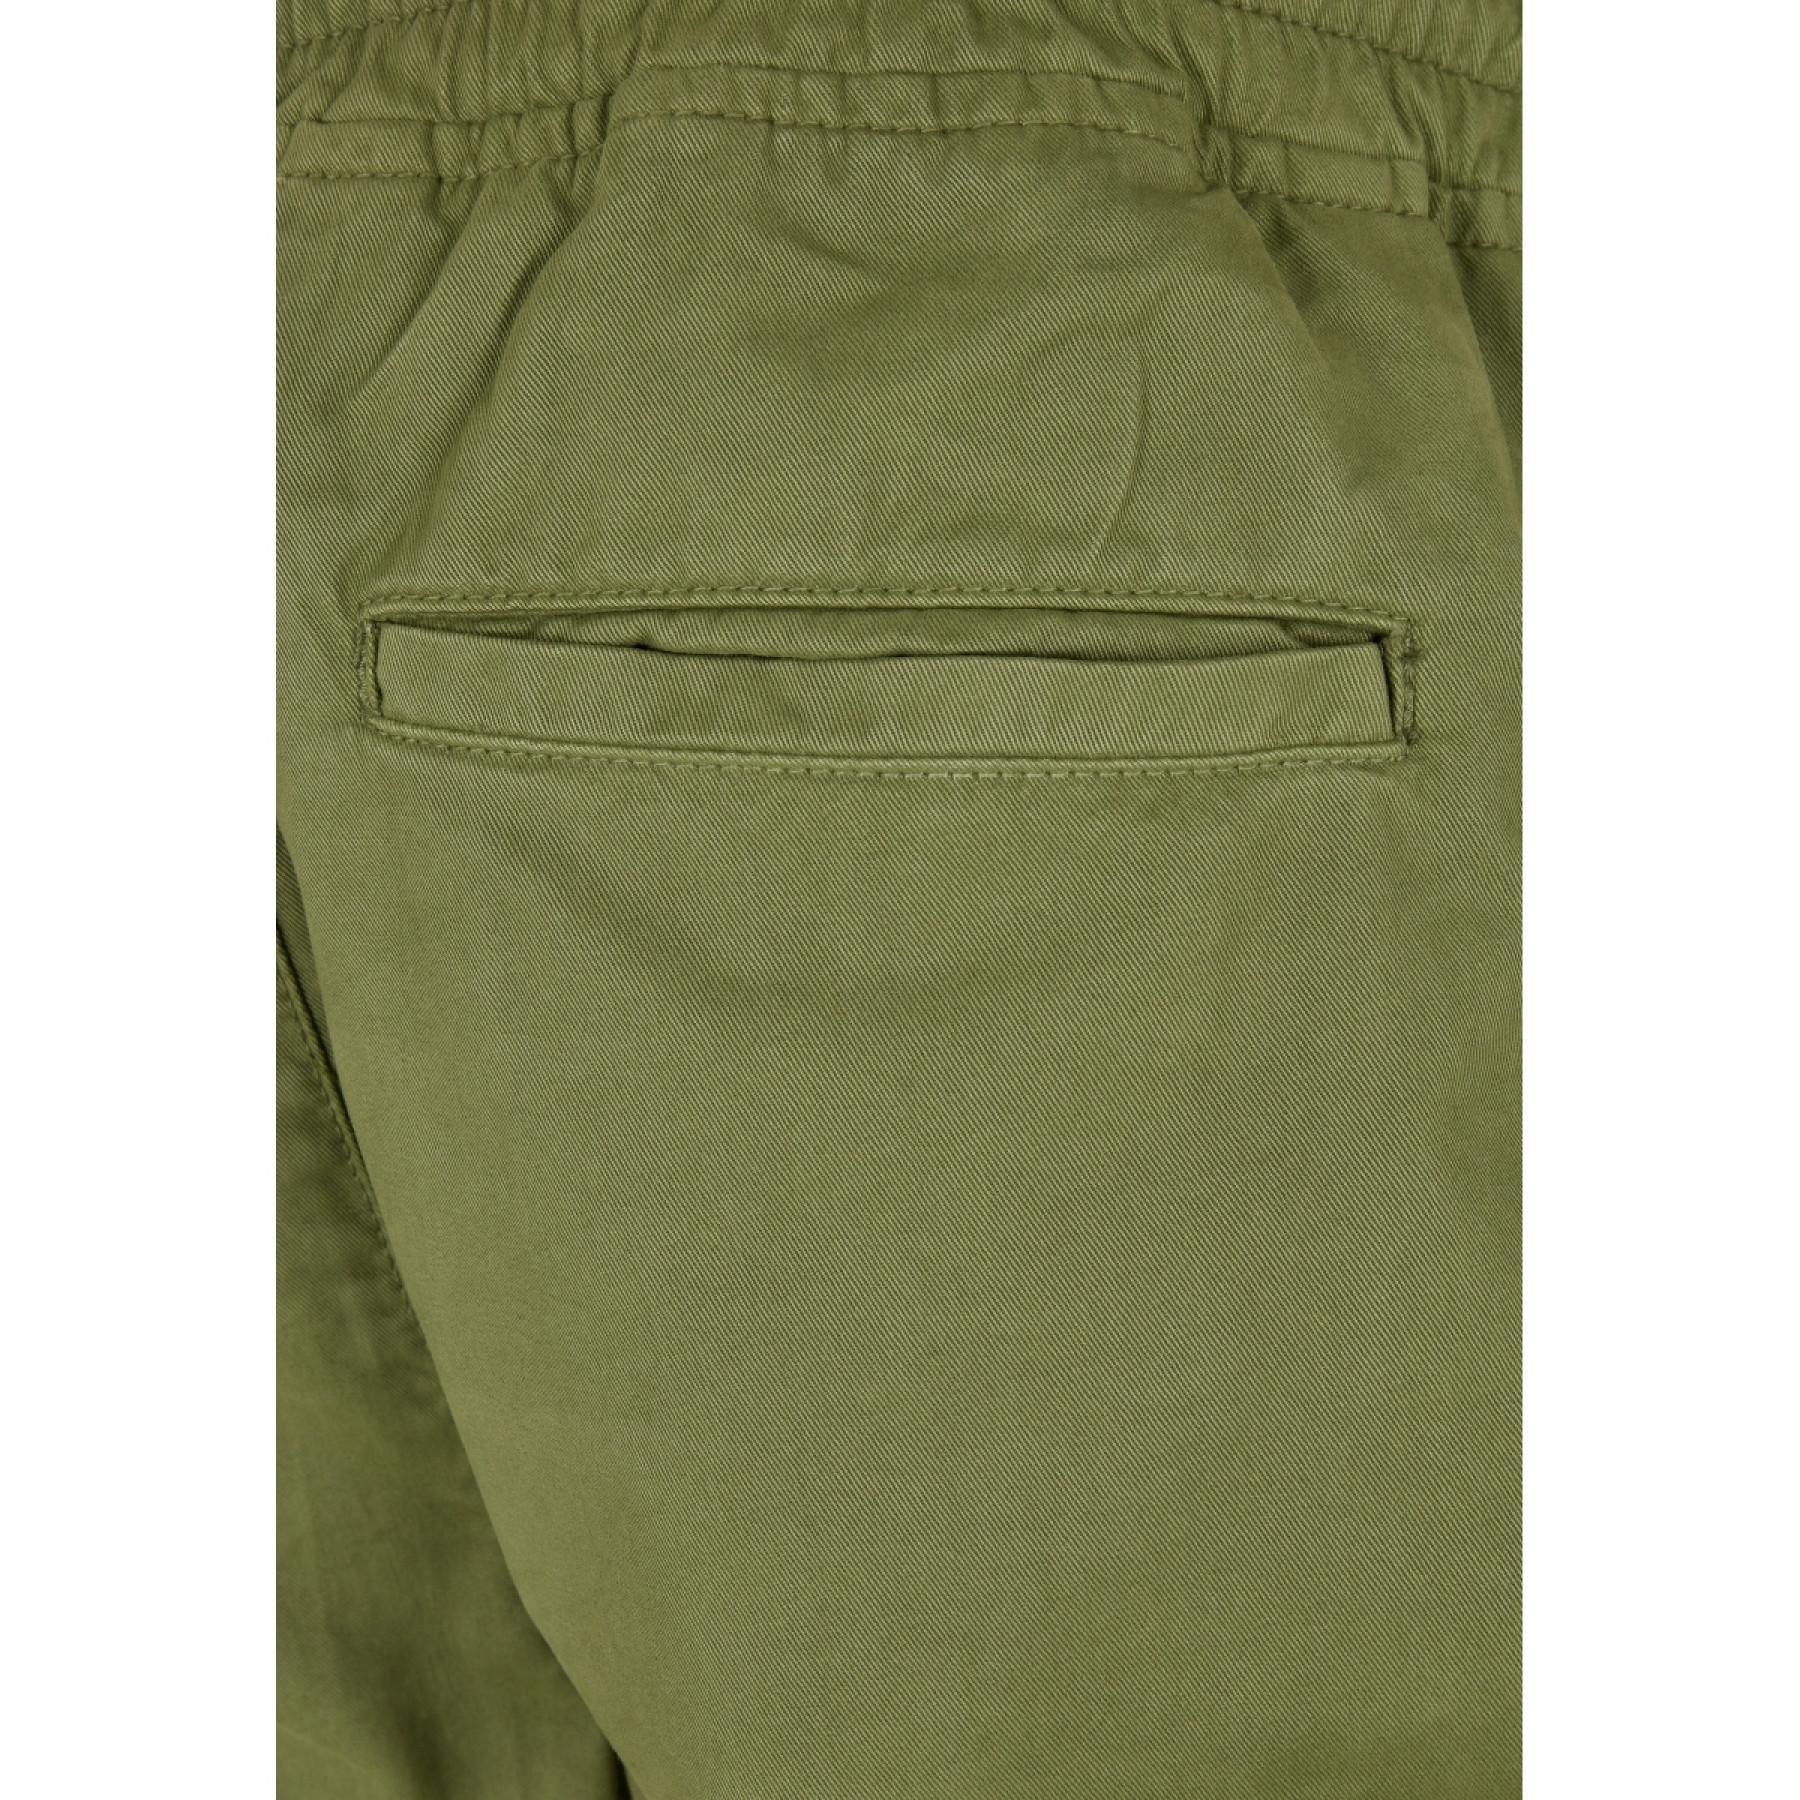 Pantaloni Urban Classics military-grandes tailles